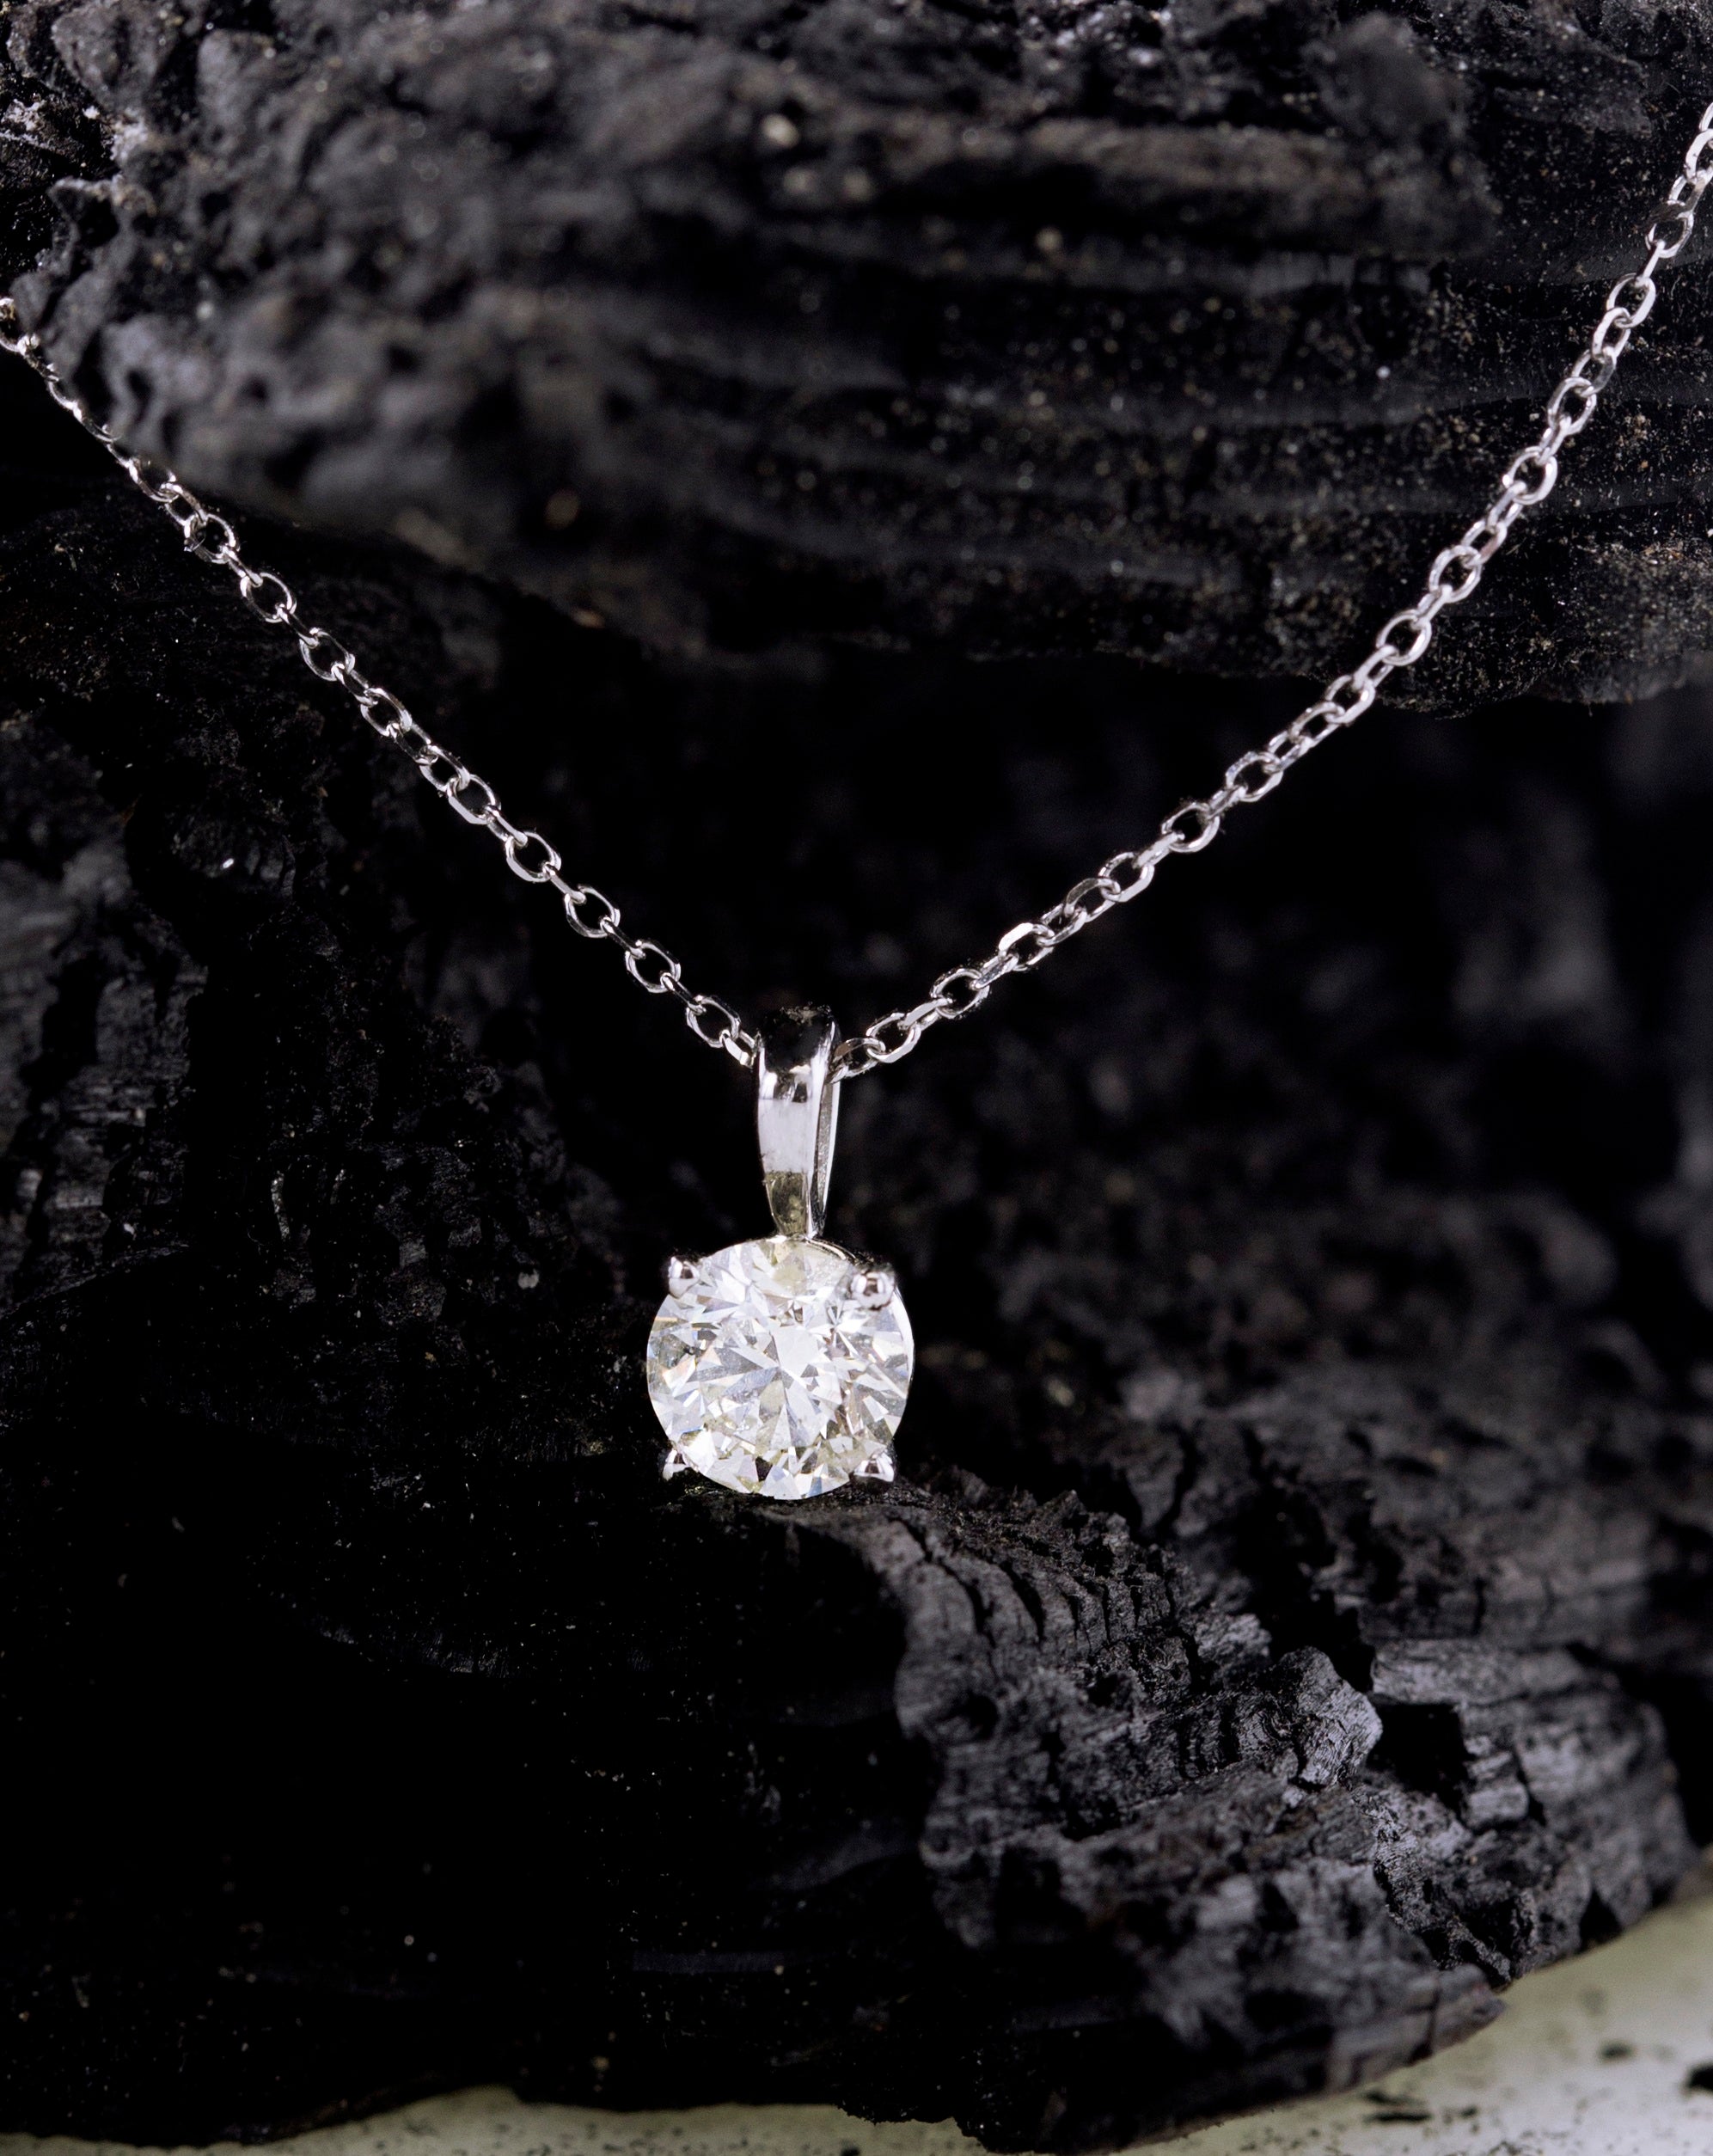 A natural earth born diamond set into a pendant on a necklace.